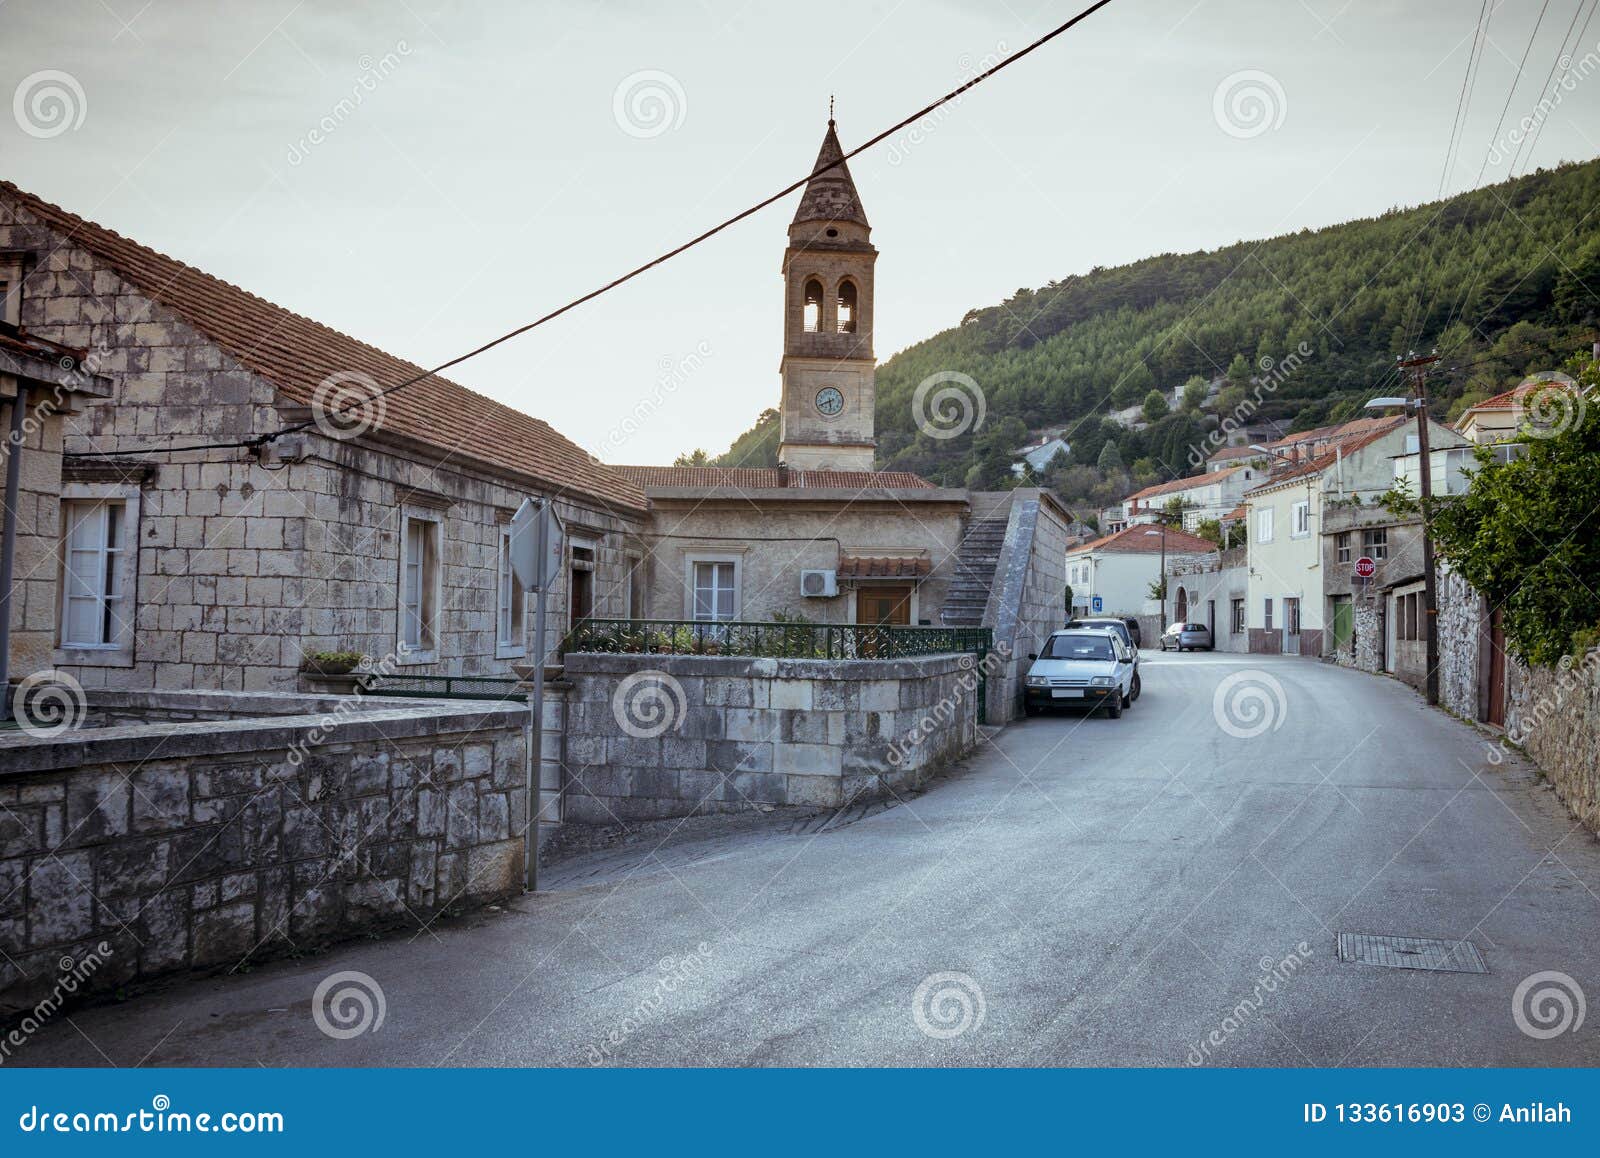 smokvica town on korcula island areal view, croatia